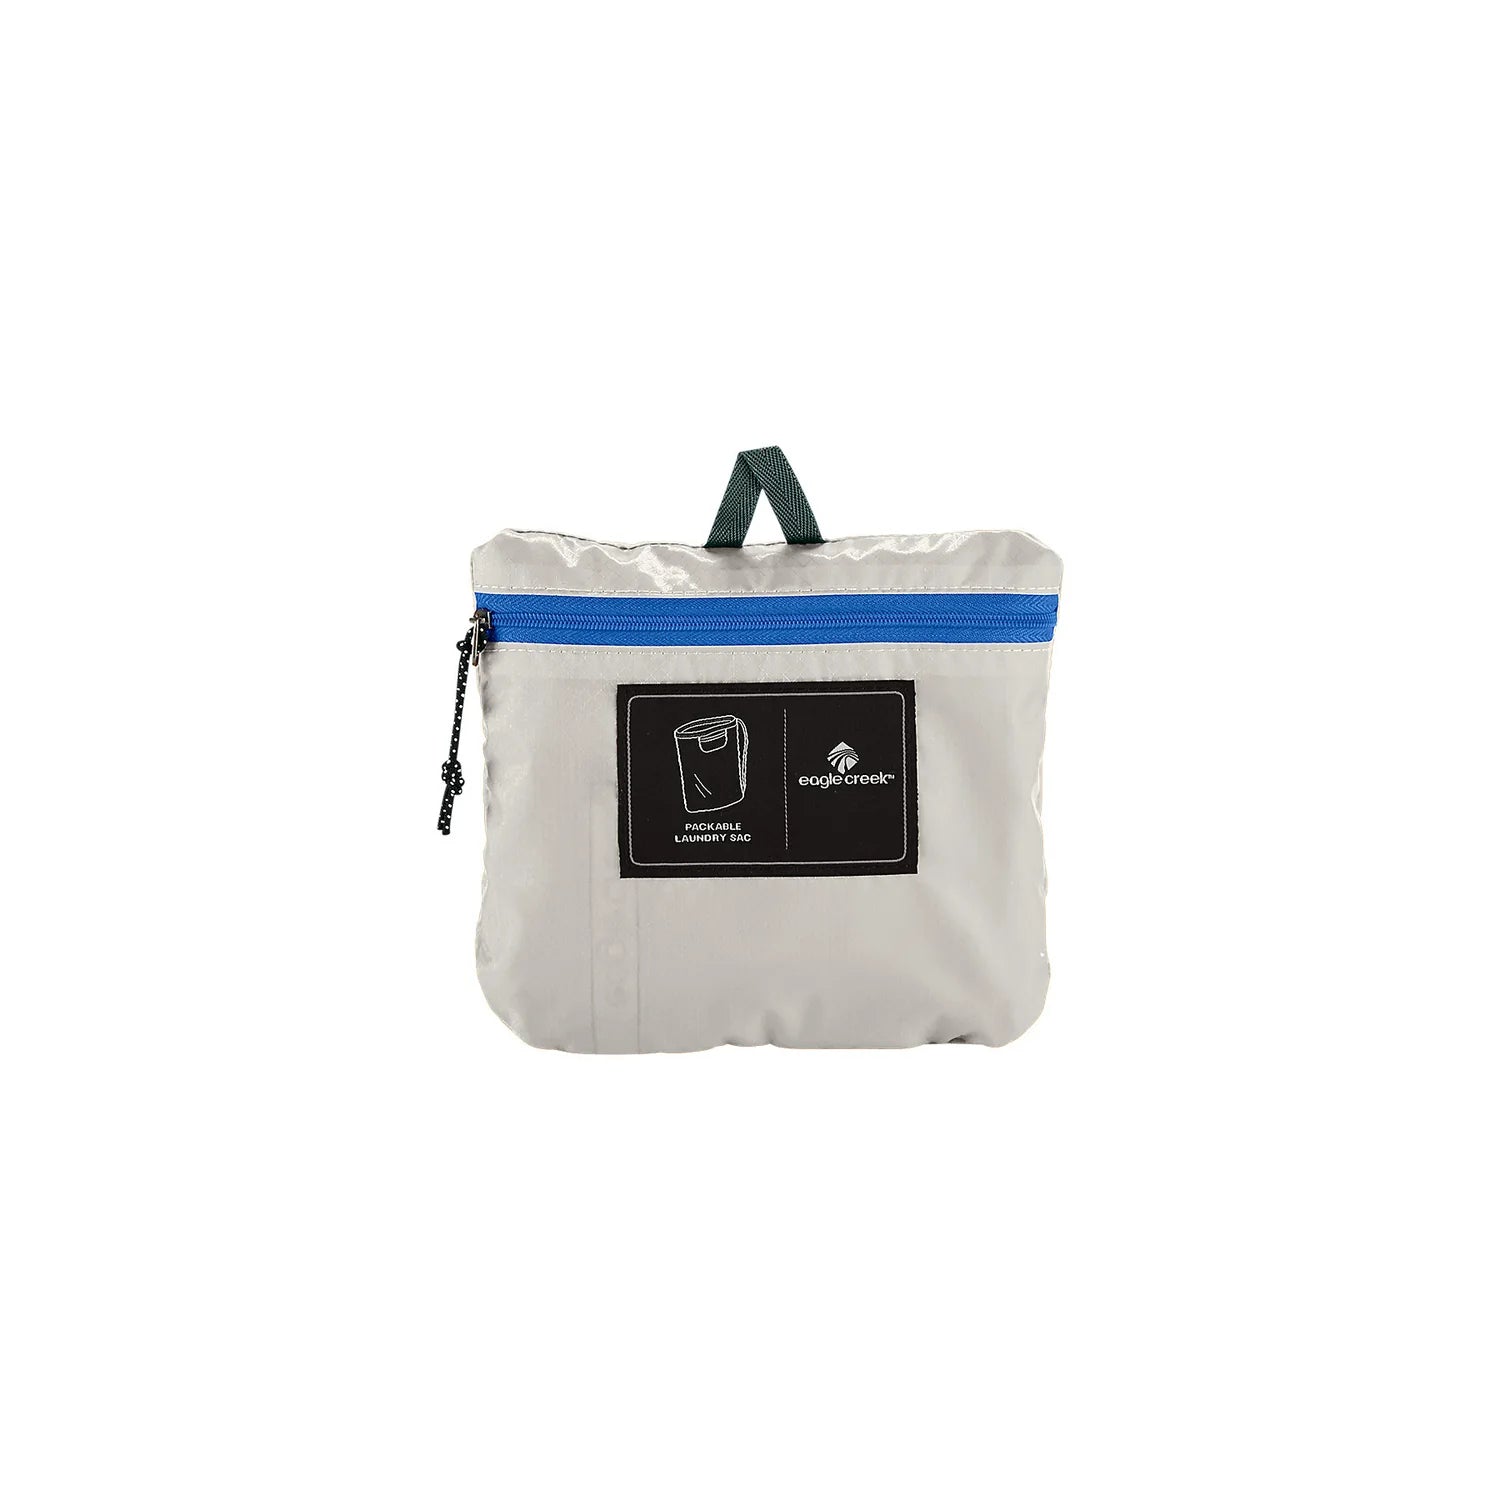 Pack-It™ Isolate Laundry Sack